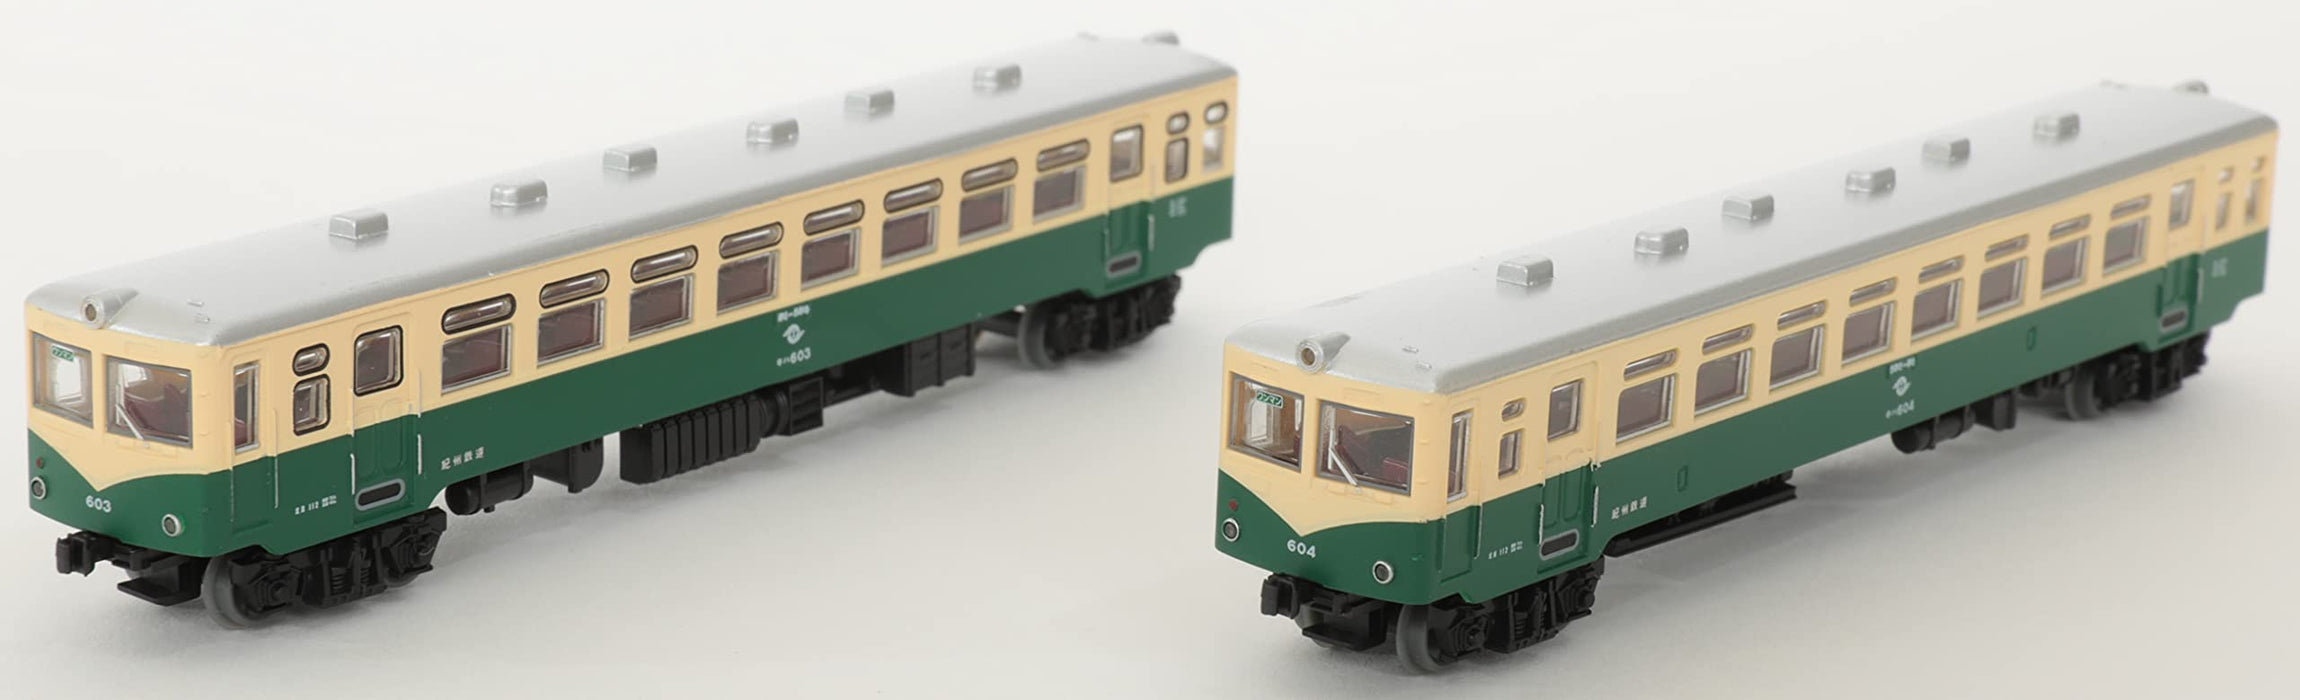 Tomytec Railway Collection Iron Kishu Kiha 600 Late Model 2-Car Set Diorama 317890